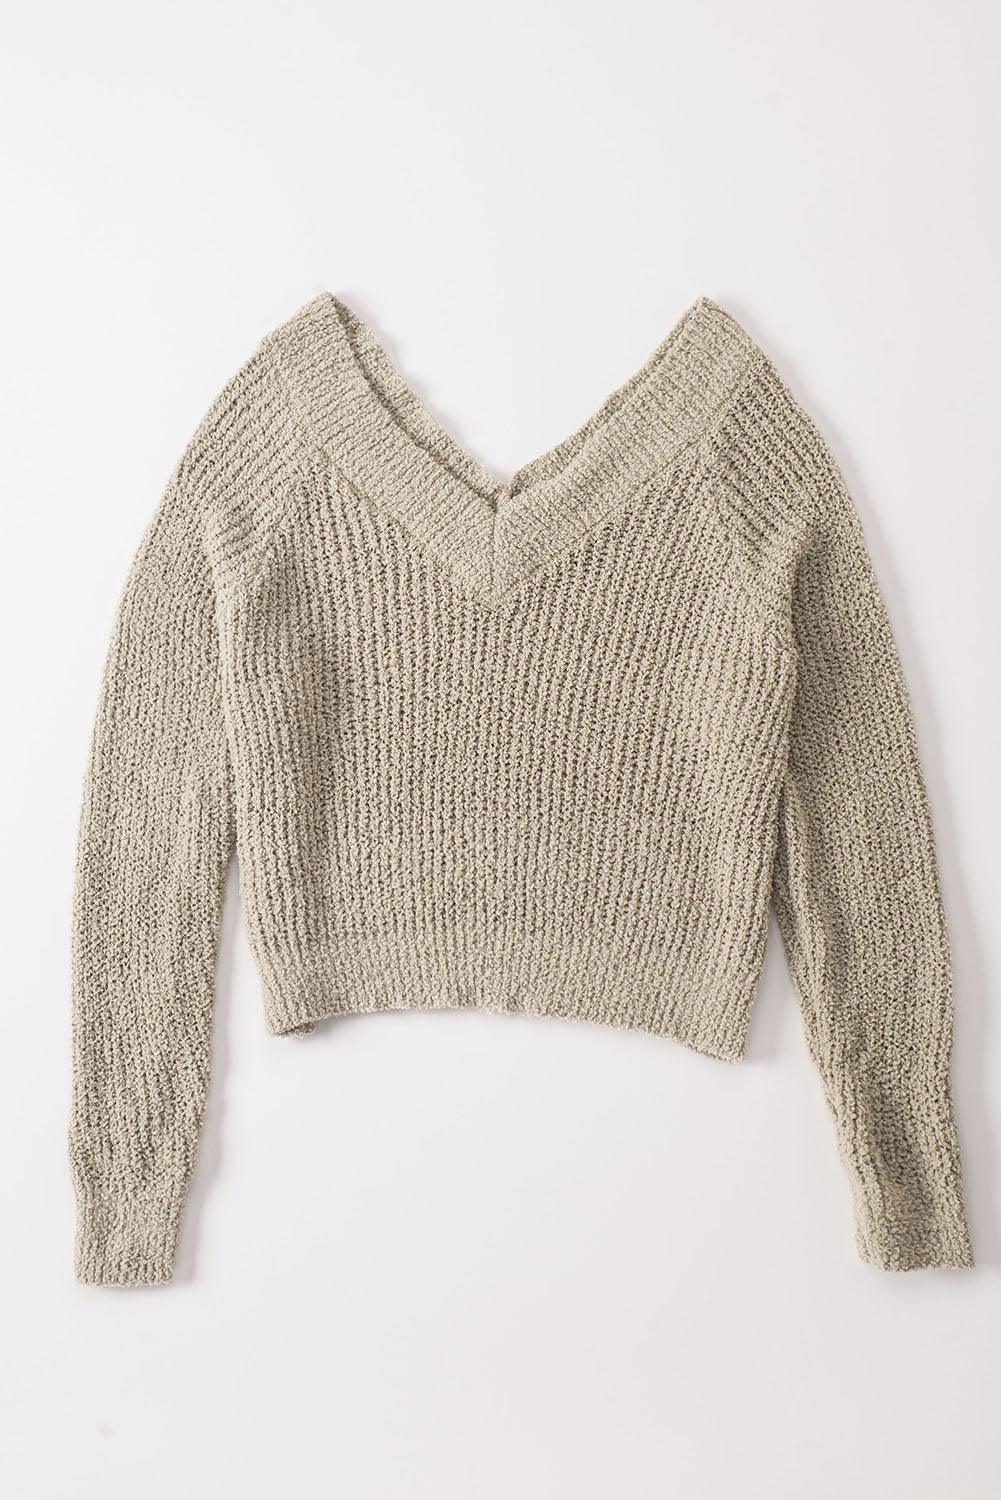 Simply V Neck Sweater - Vesteeto